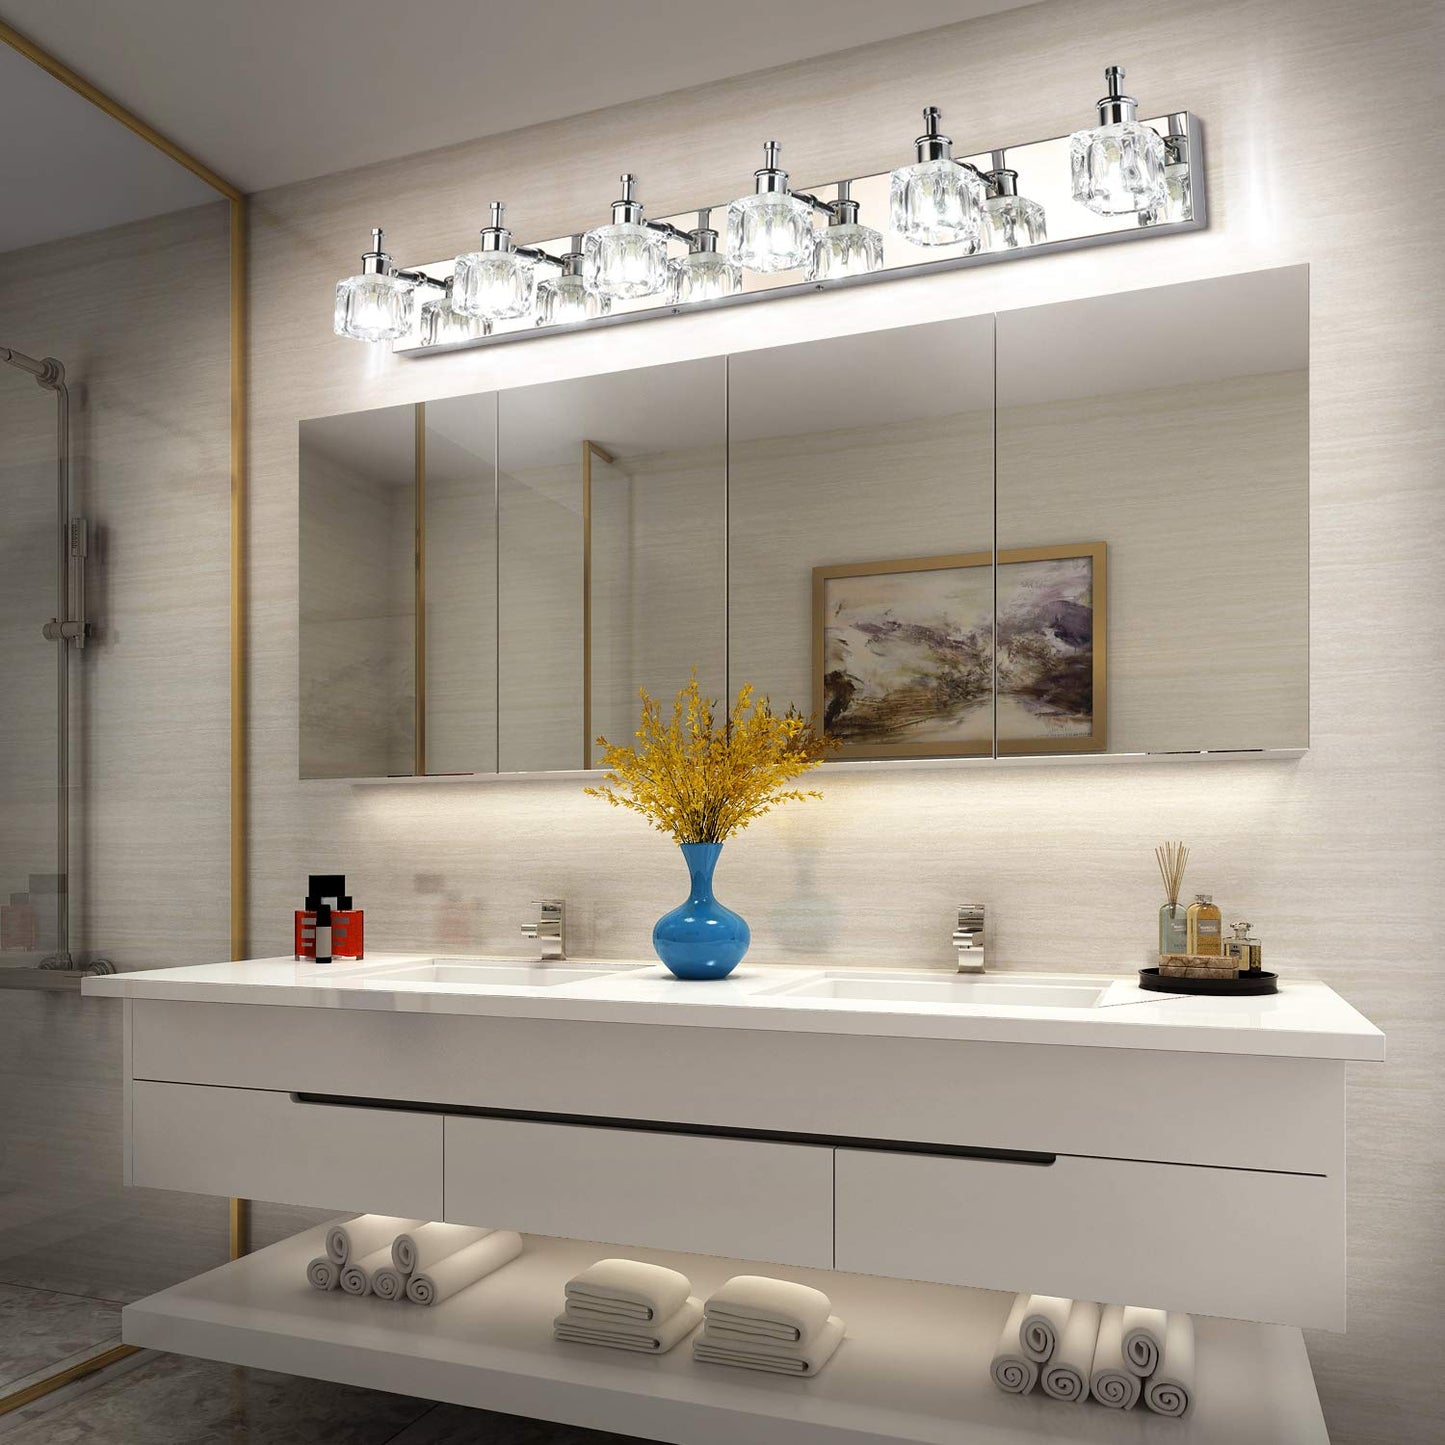 PRESDE Modern 6 Lights LED Vanity Lights for Bathroom Over Mirror(Exclude Bulb) - Like New